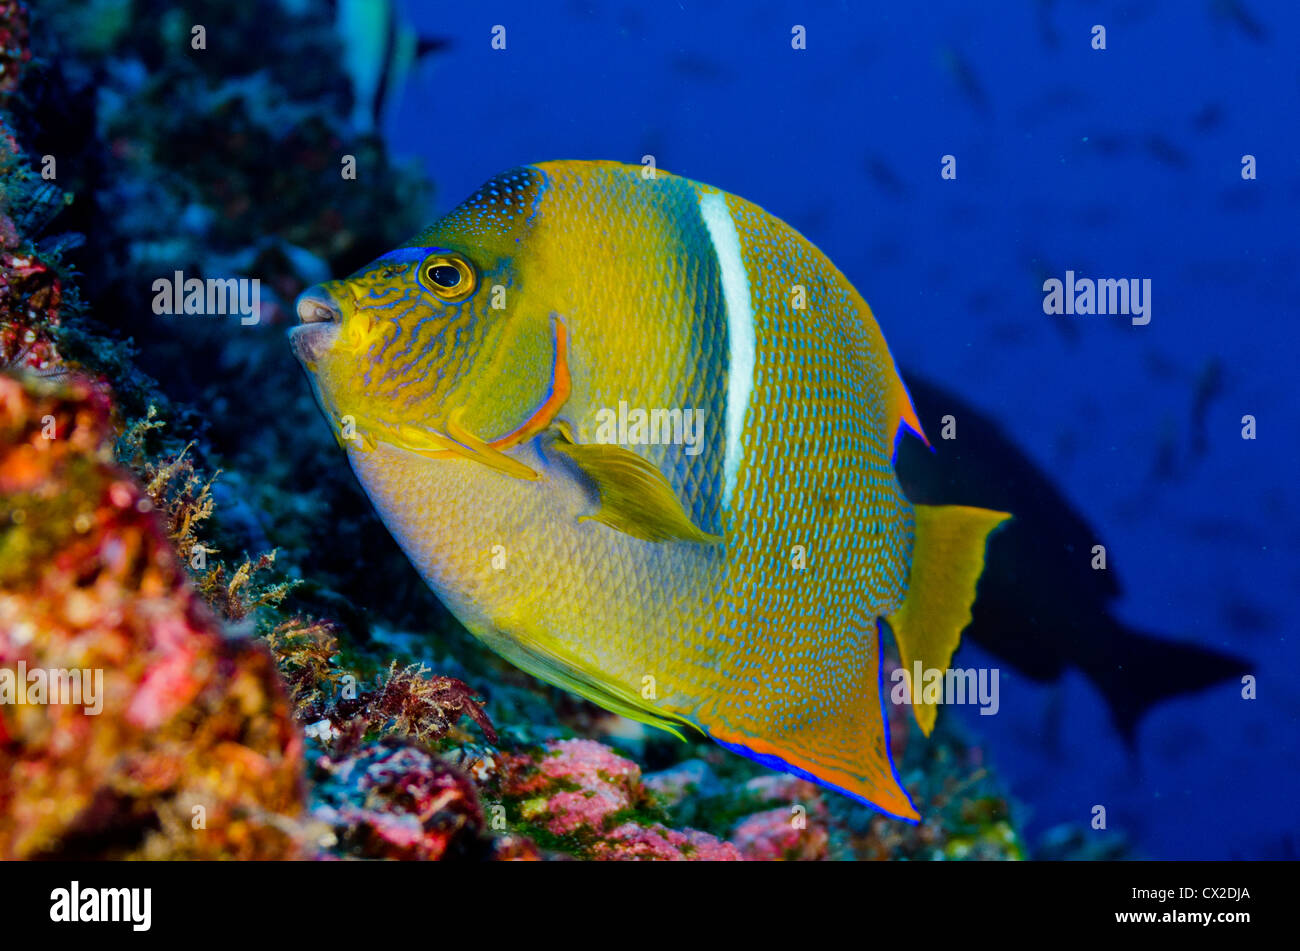 Unterwasser Riff in Cocos Island, costarica, Fisch, Angel Fische, blaues Wasser, klare Wasser, bunt, Farbe, Korallenriff, Ozean, Meer Stockfoto